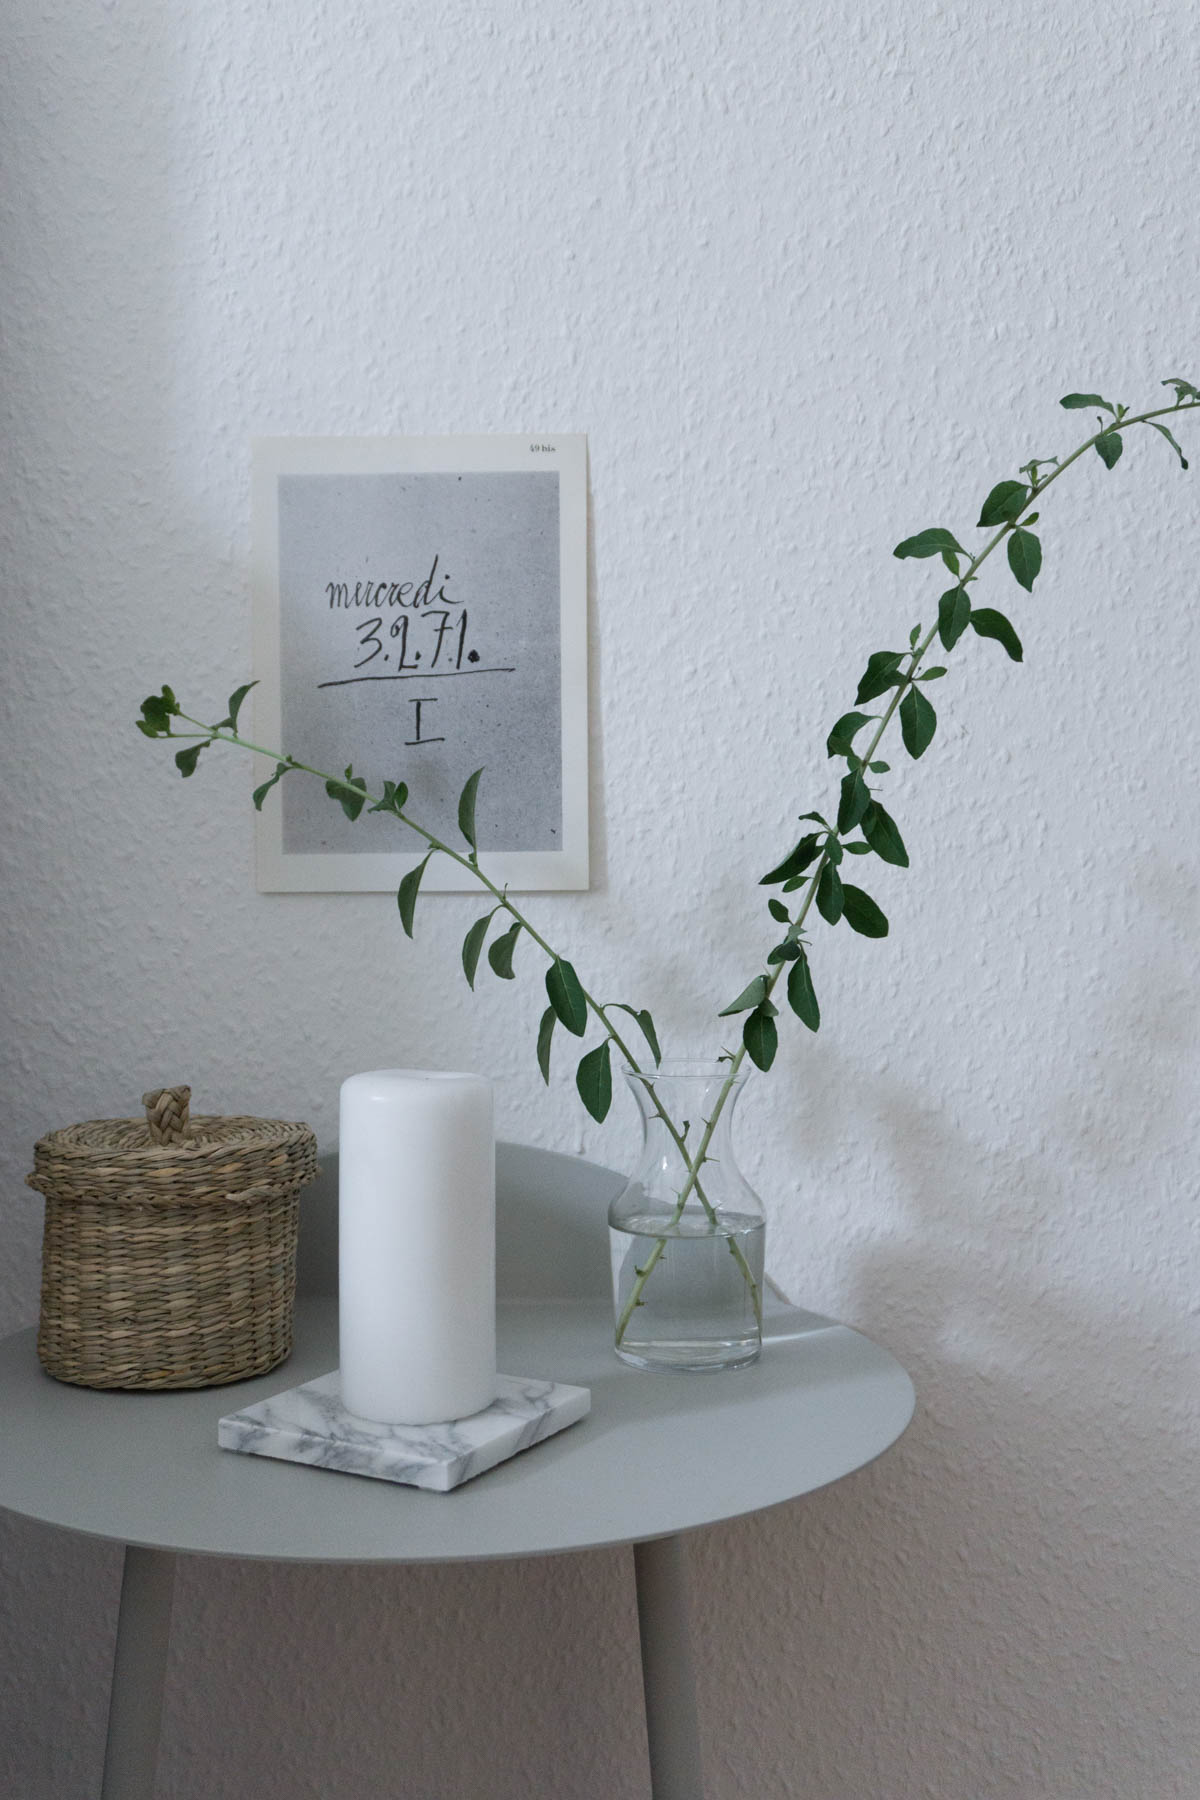 Scandinavian Interior / Side Table / Minimalist Home / Berlin Flat / RG Daily Blog